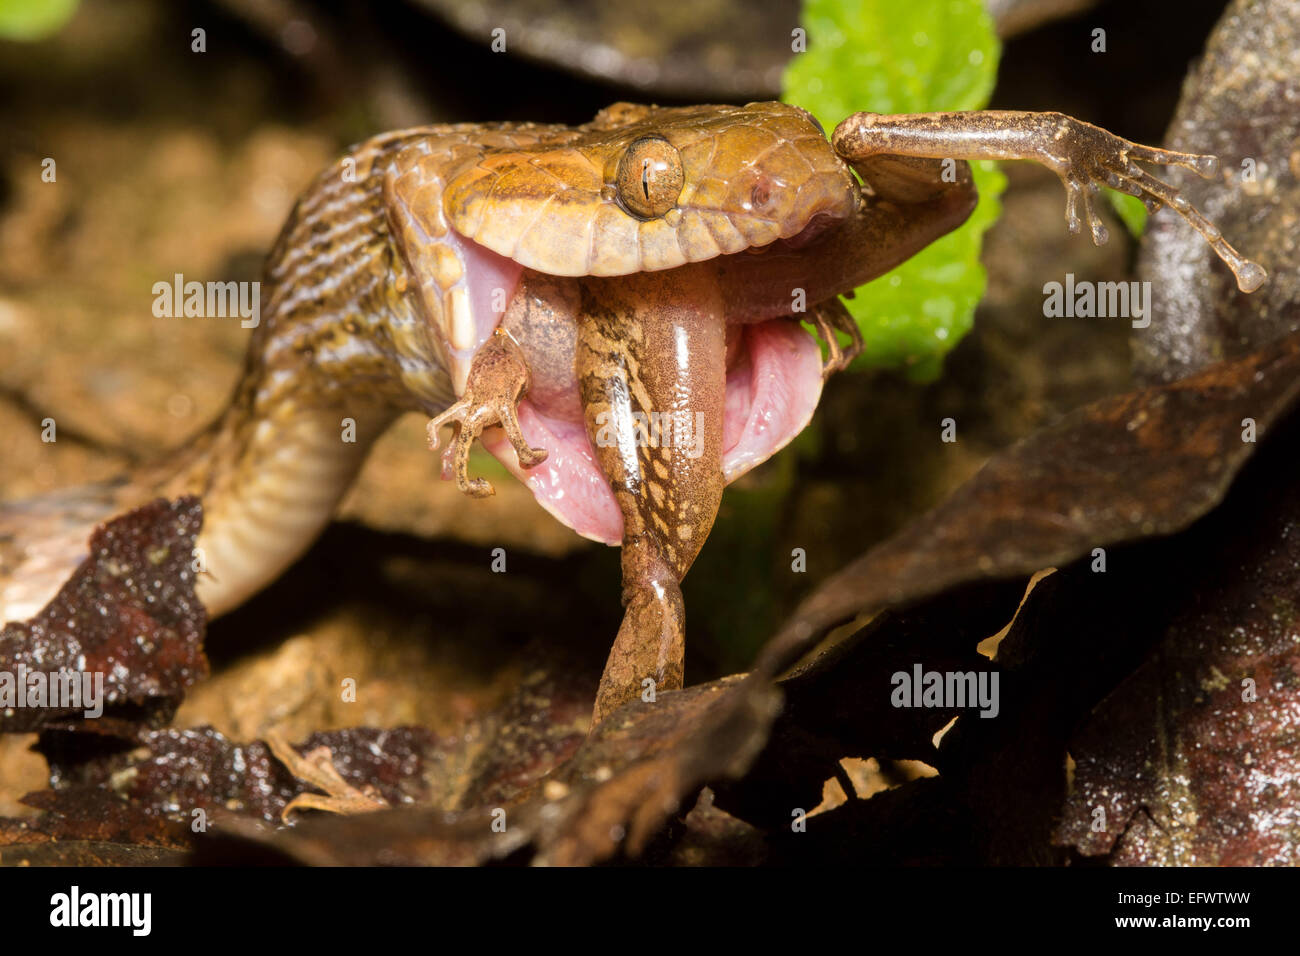 Un gatto settentrionale-eyed Snake ( Leptodeira septentrionalis) mangia un Pristimantis sp. in Ecuador. Foto Stock